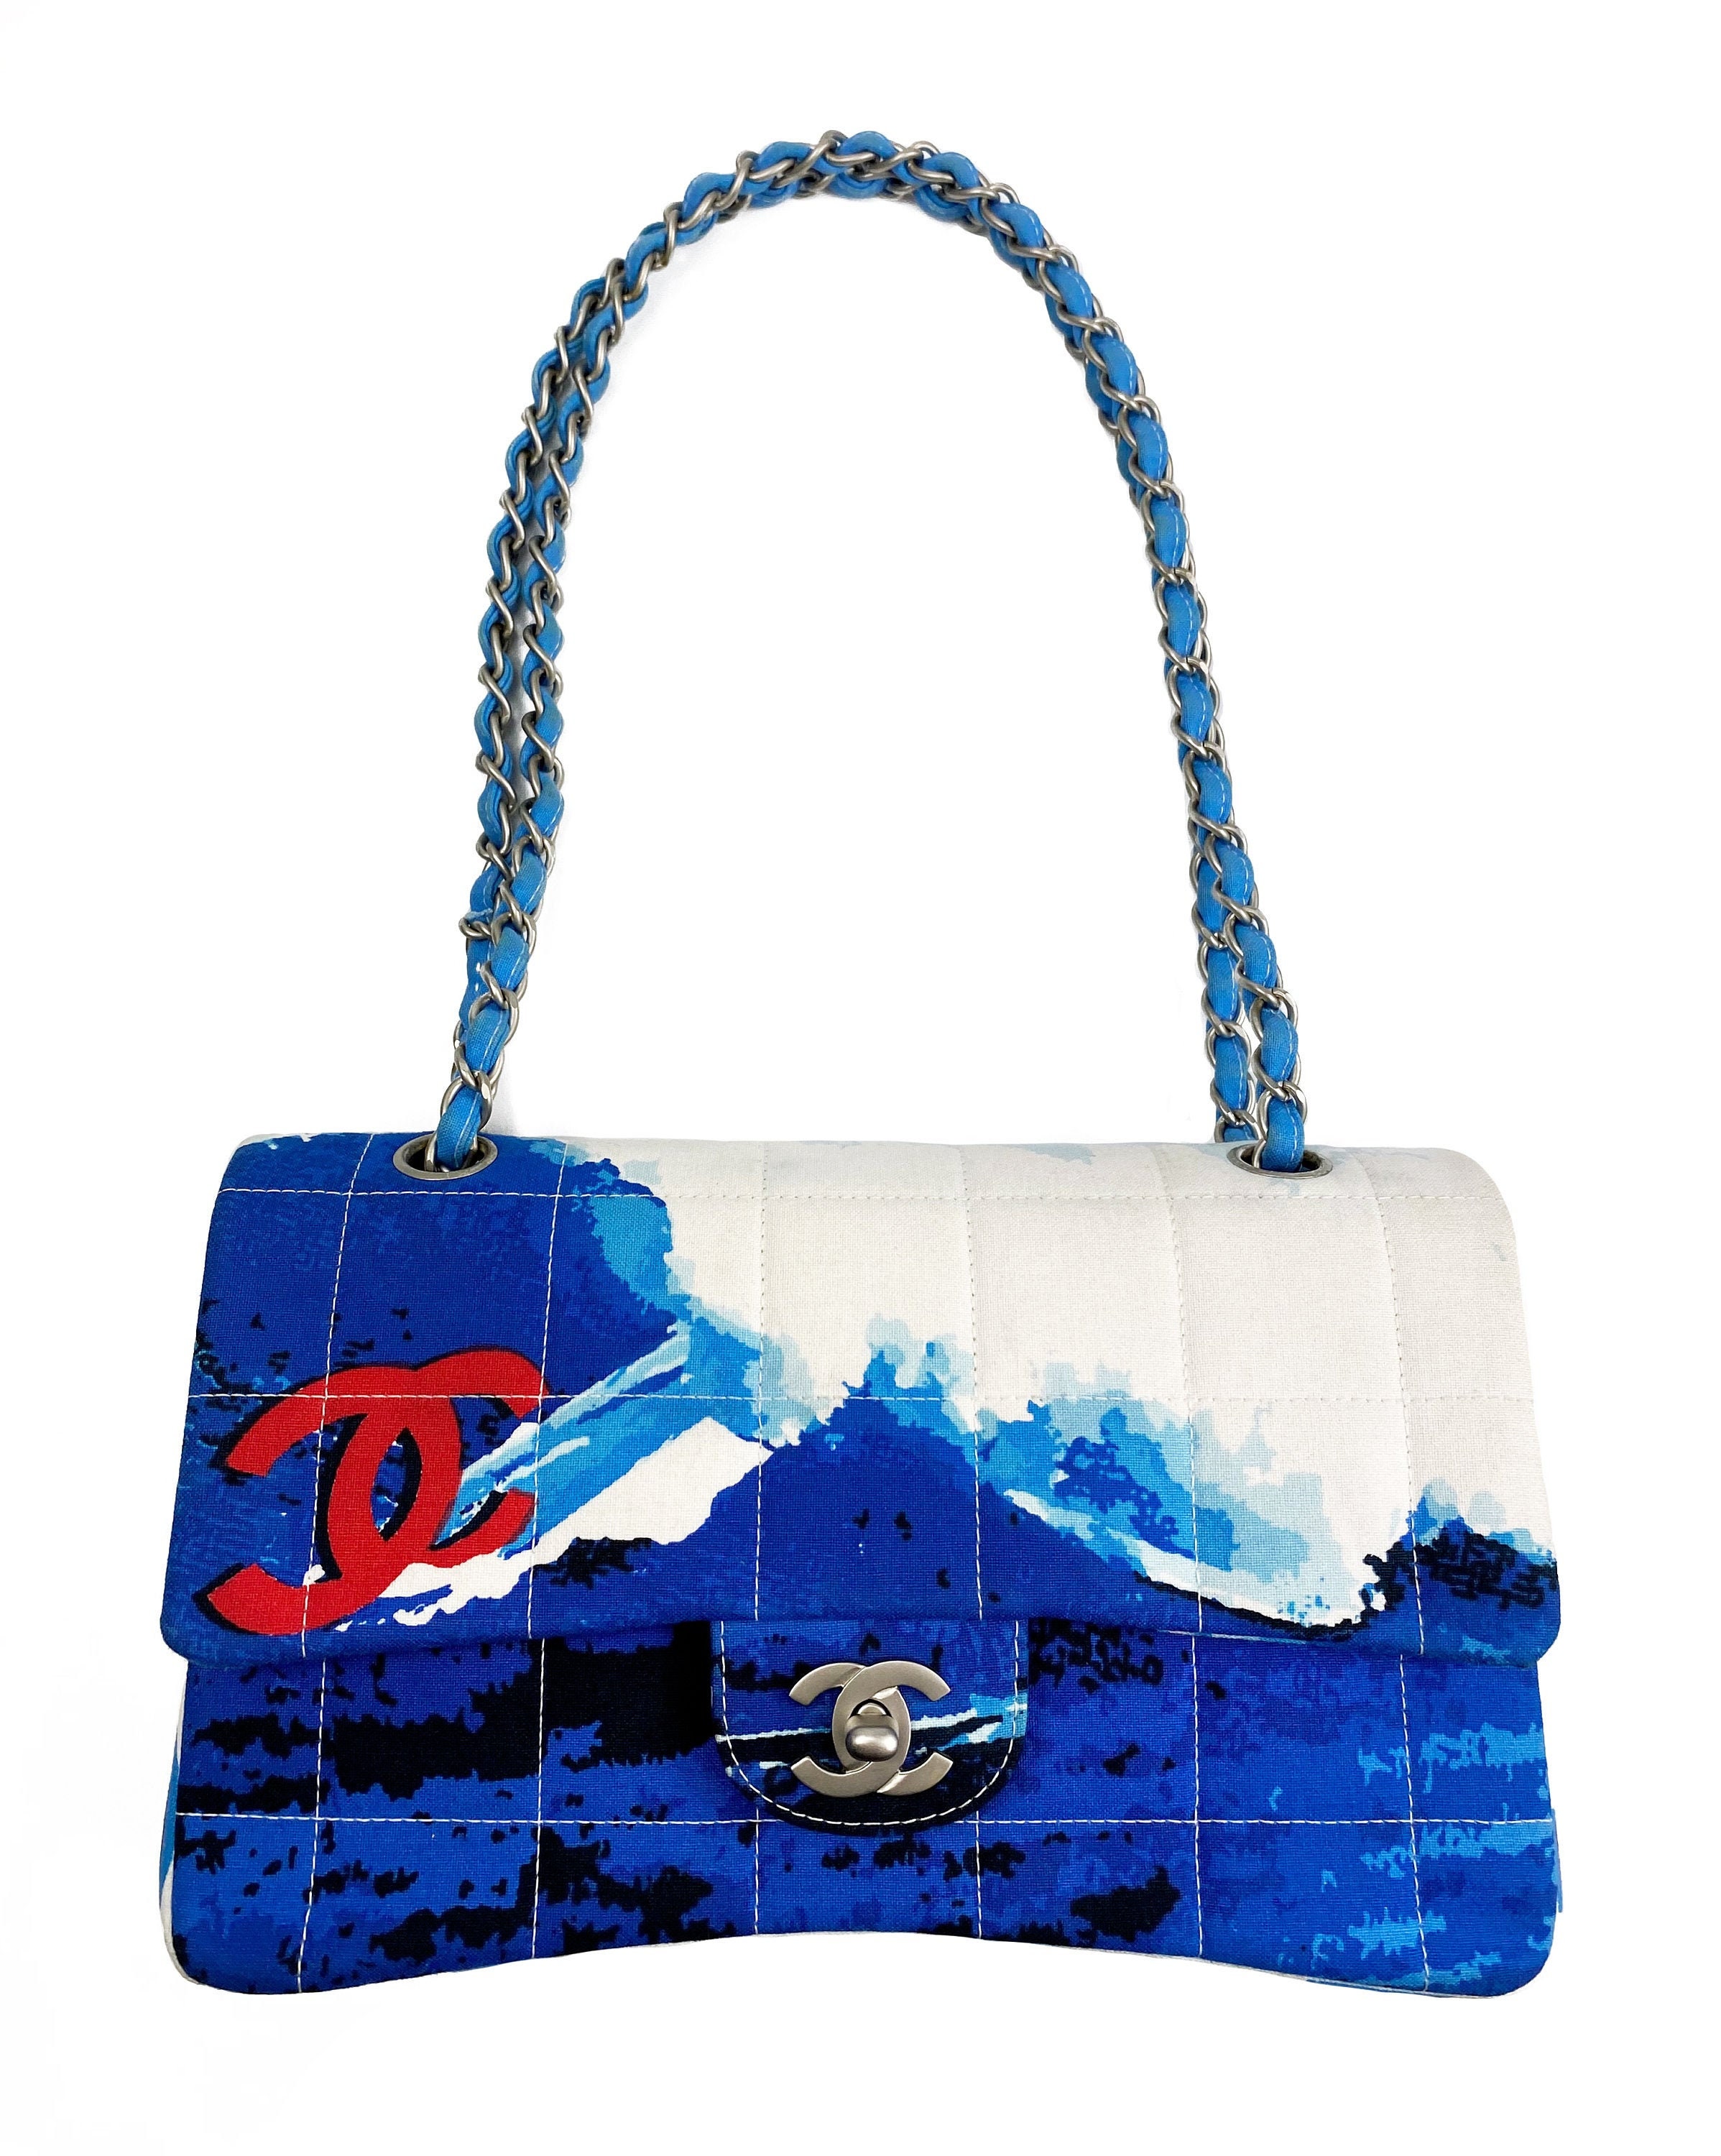 Japan Brand Lux - It's rare, Vintage Chanel single flap bag #handbag # chanelbag #brandedbag #branded #totebag #chanel